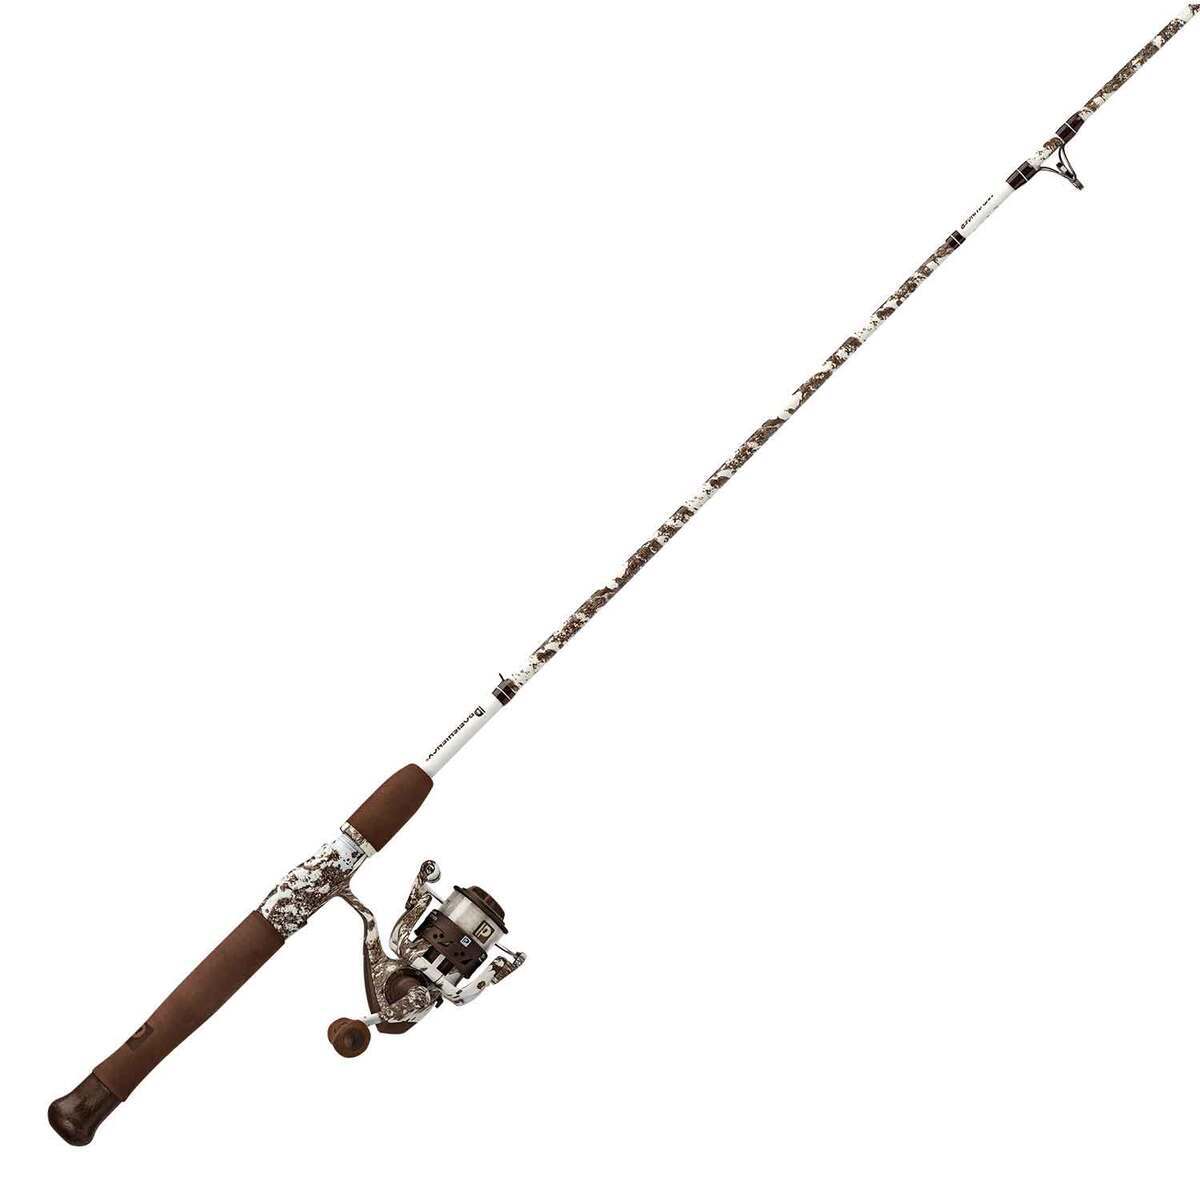 Anglerbasics 2PCS Medium Catfish Casting Travel Rod for River Lake